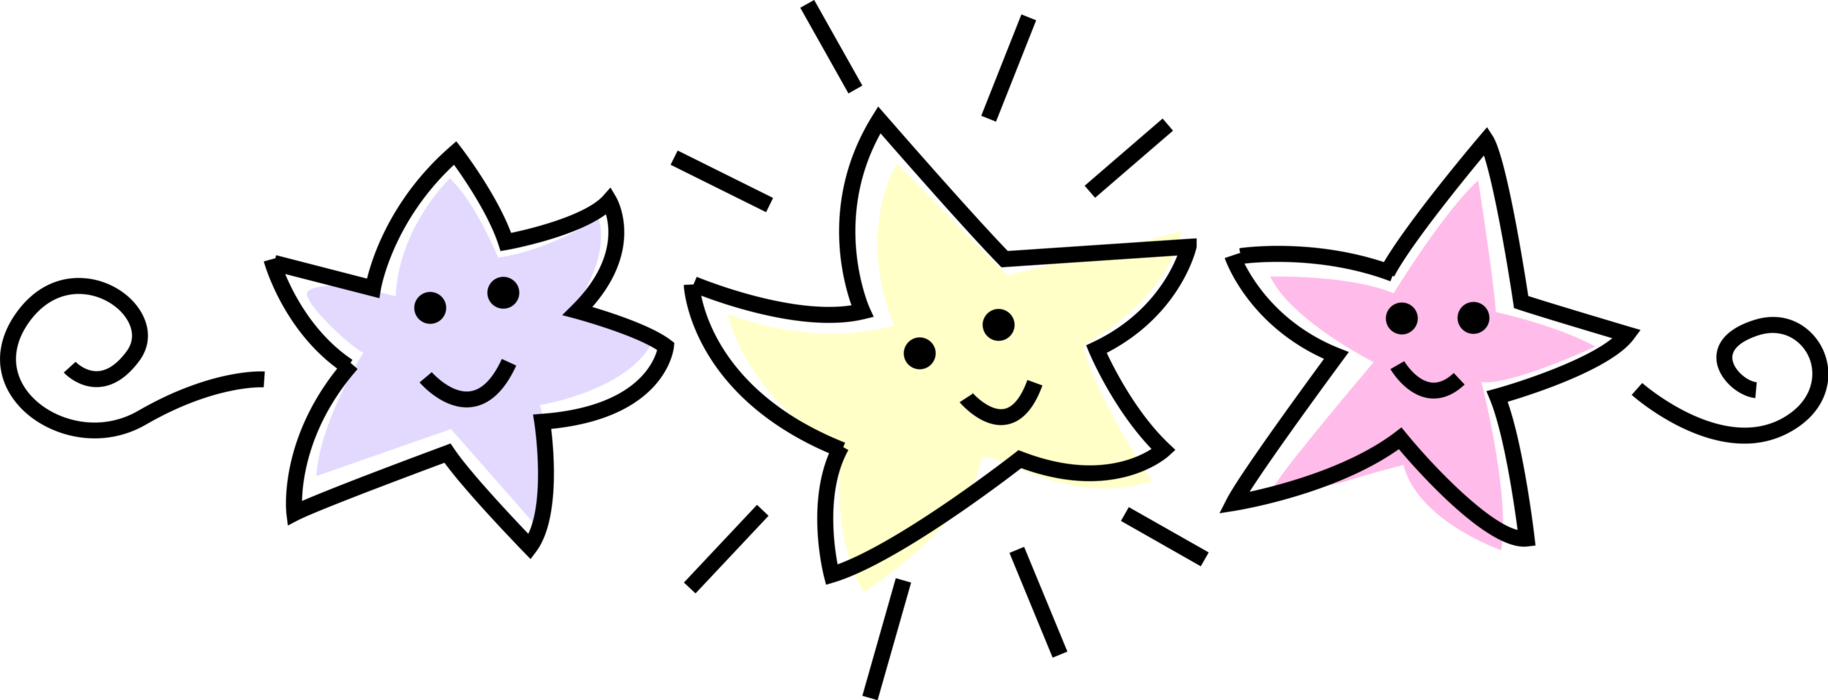 Vector Illustration of Anthropomorphic Happy Stars